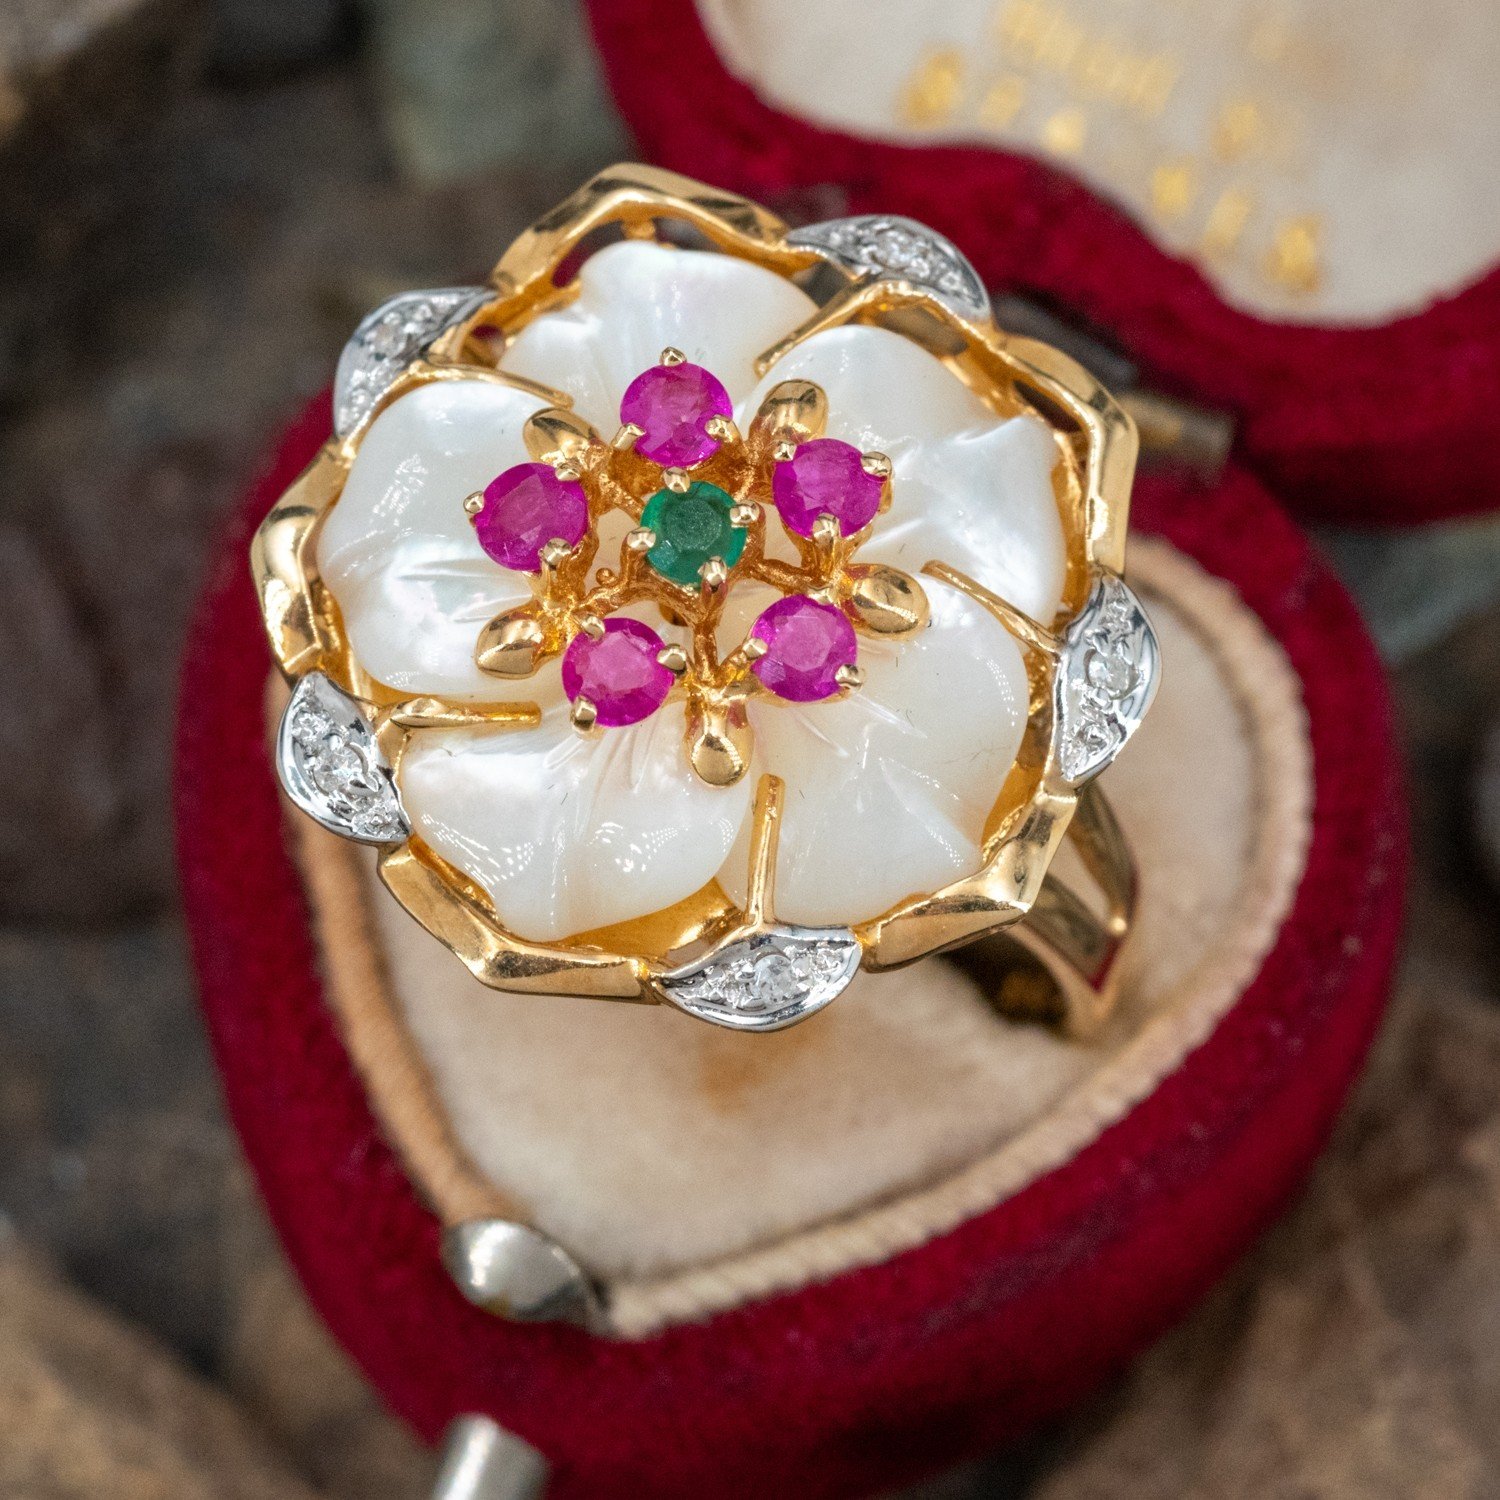 Buy Small Kundan Jadau Ring Rings Online in India - The Miraya Store